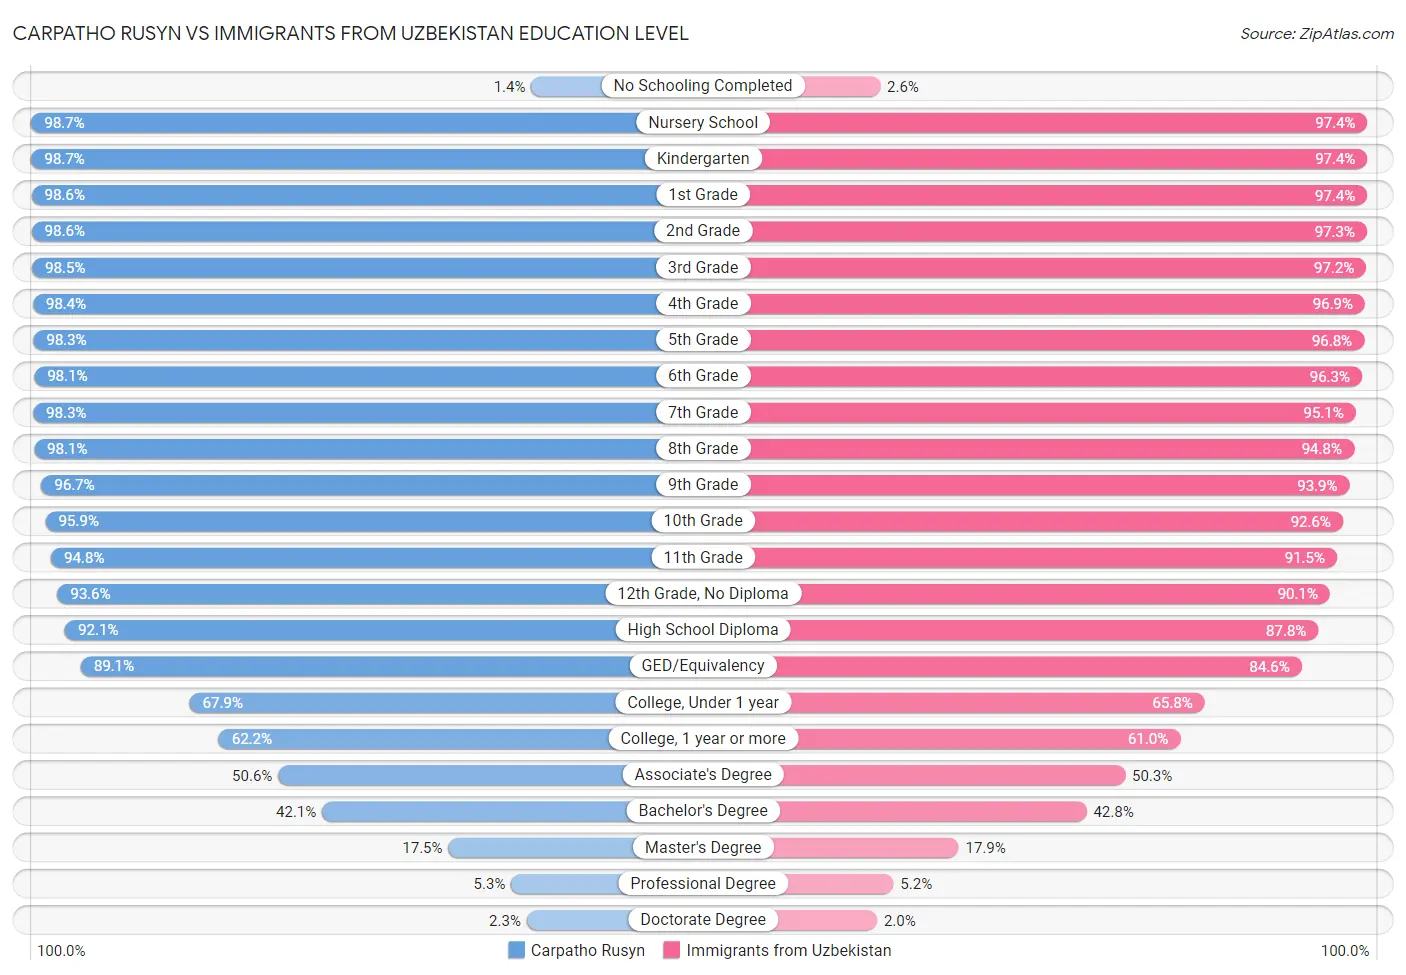 Carpatho Rusyn vs Immigrants from Uzbekistan Education Level